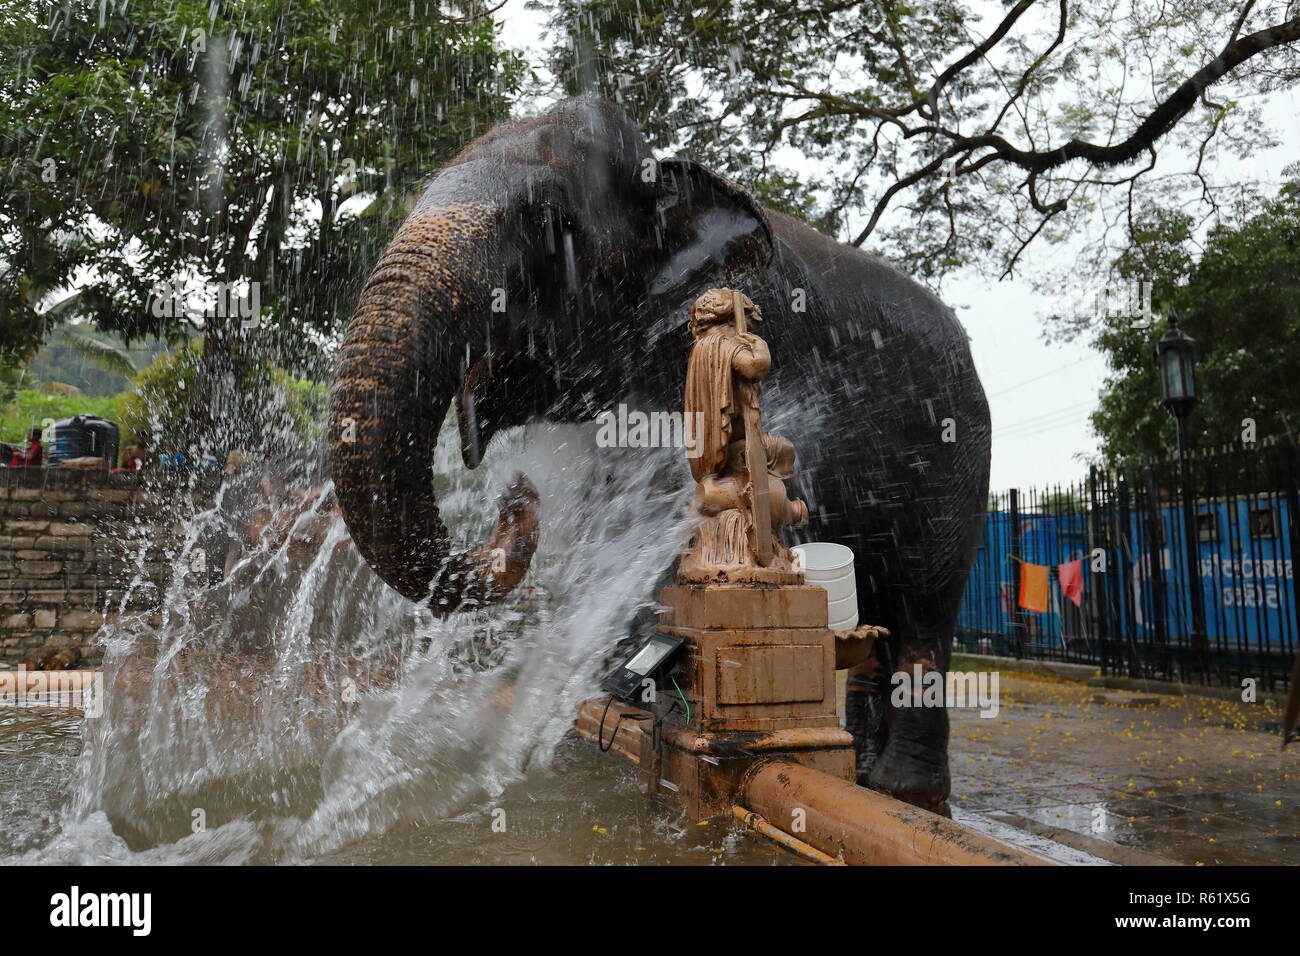 temple elephant of kandy in sri lanka Stock Photo